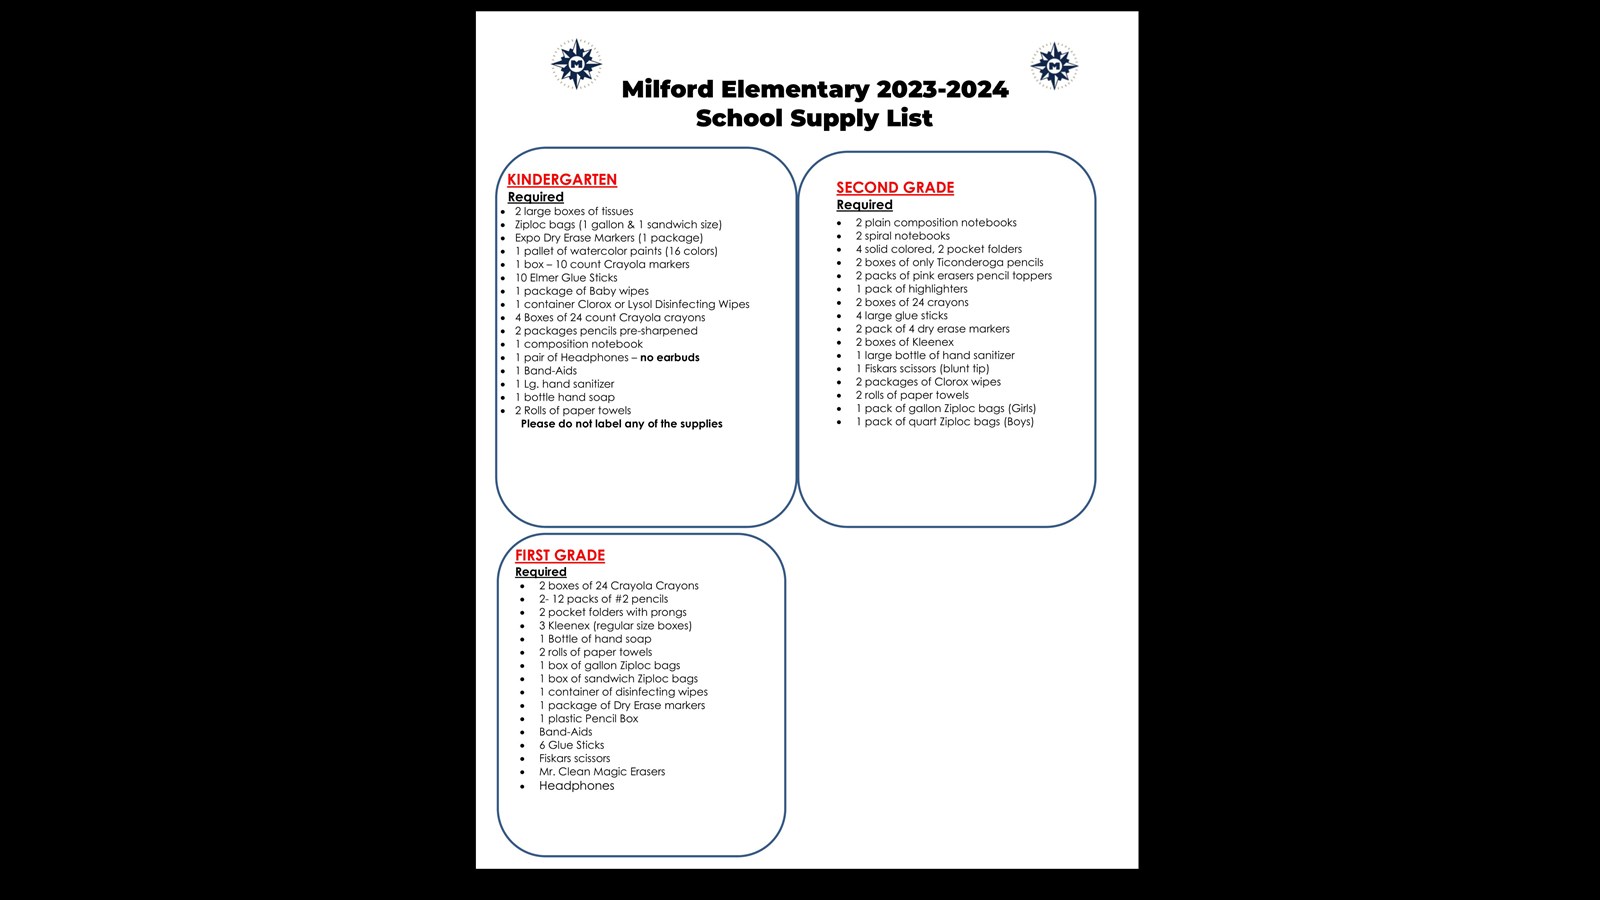 School Supply List for the 20232024 School Year